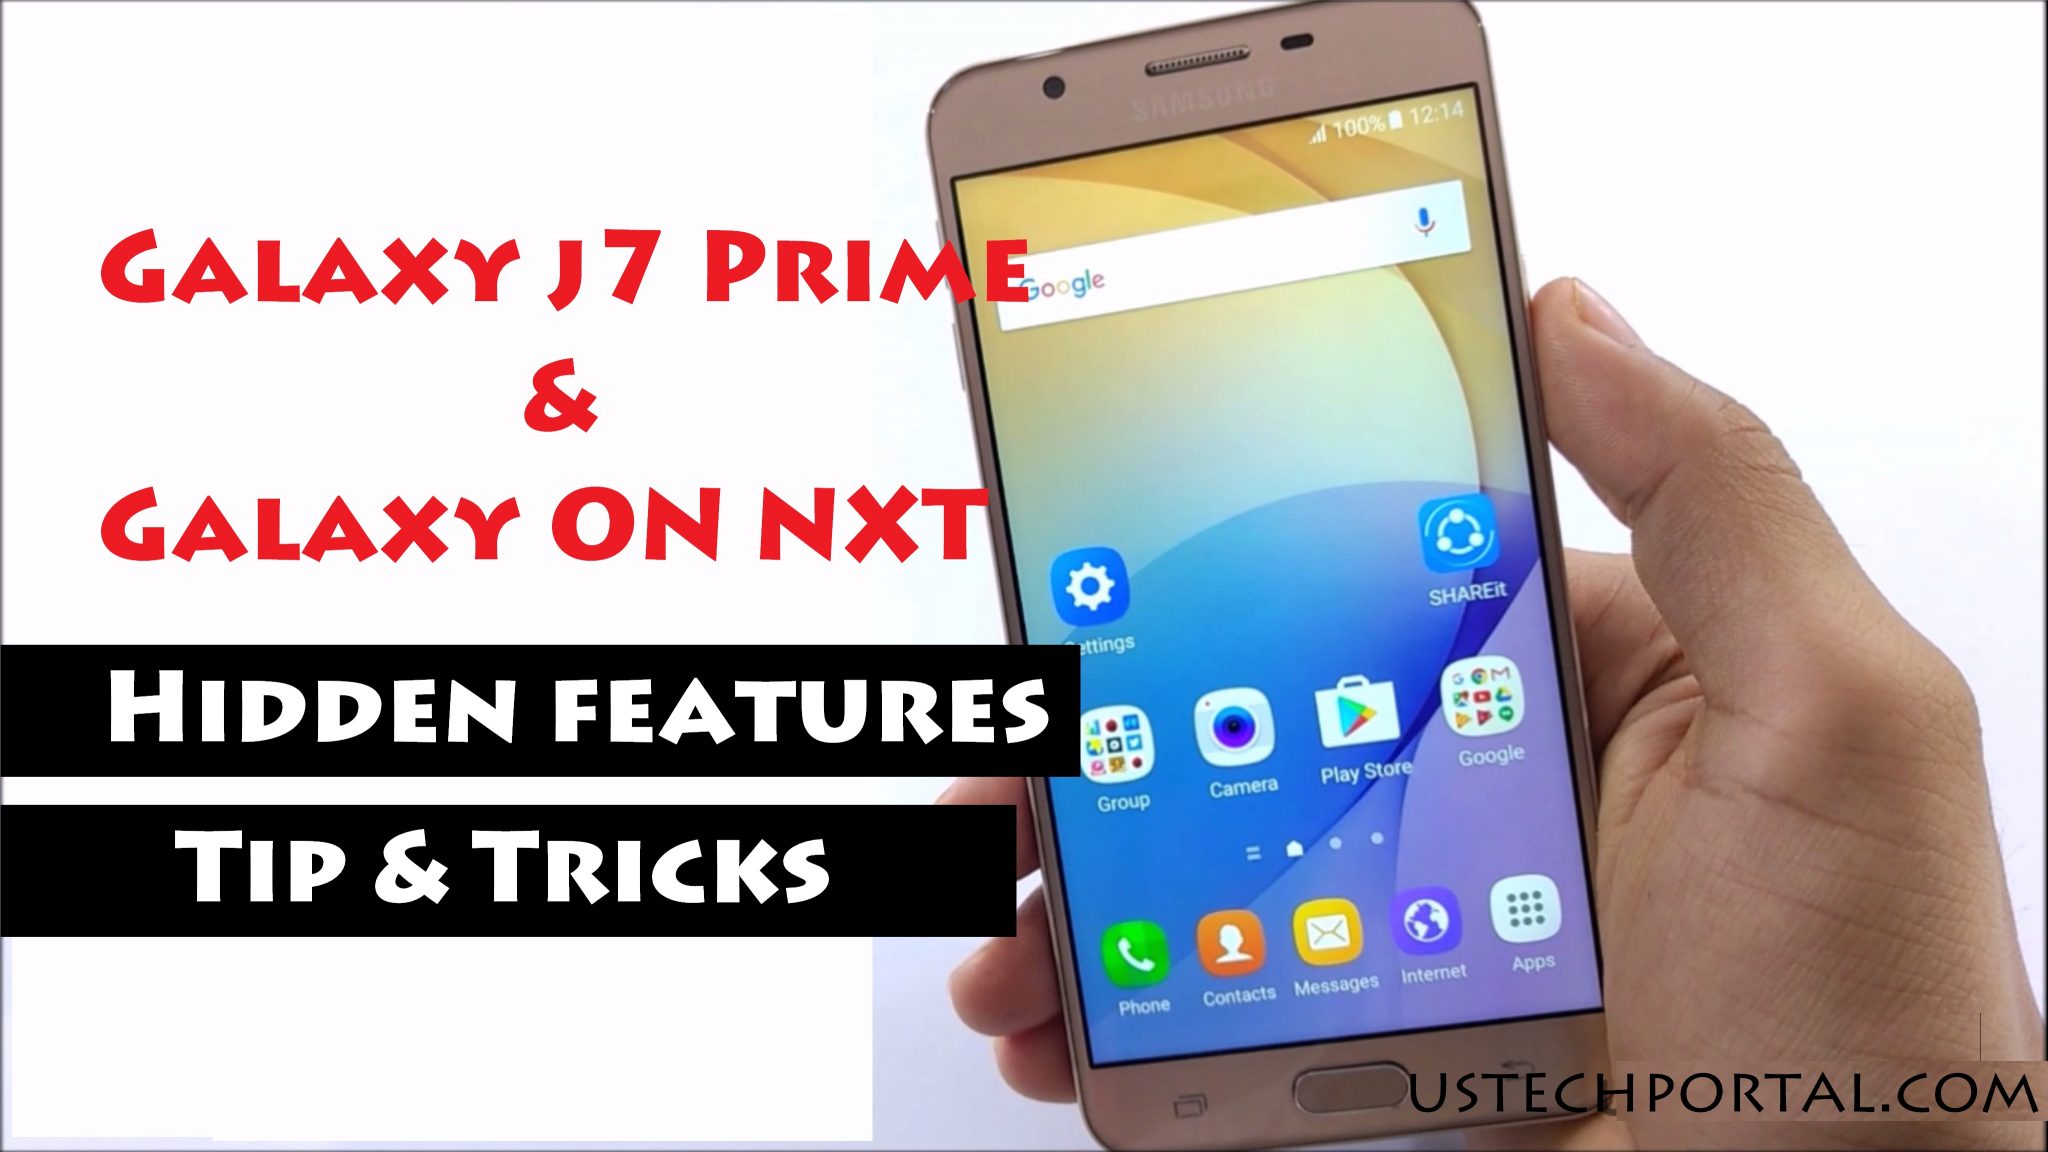 Samsung Galaxy J7 Prime -Galaxy On Nxt Hidden Features - Tips - Tricks